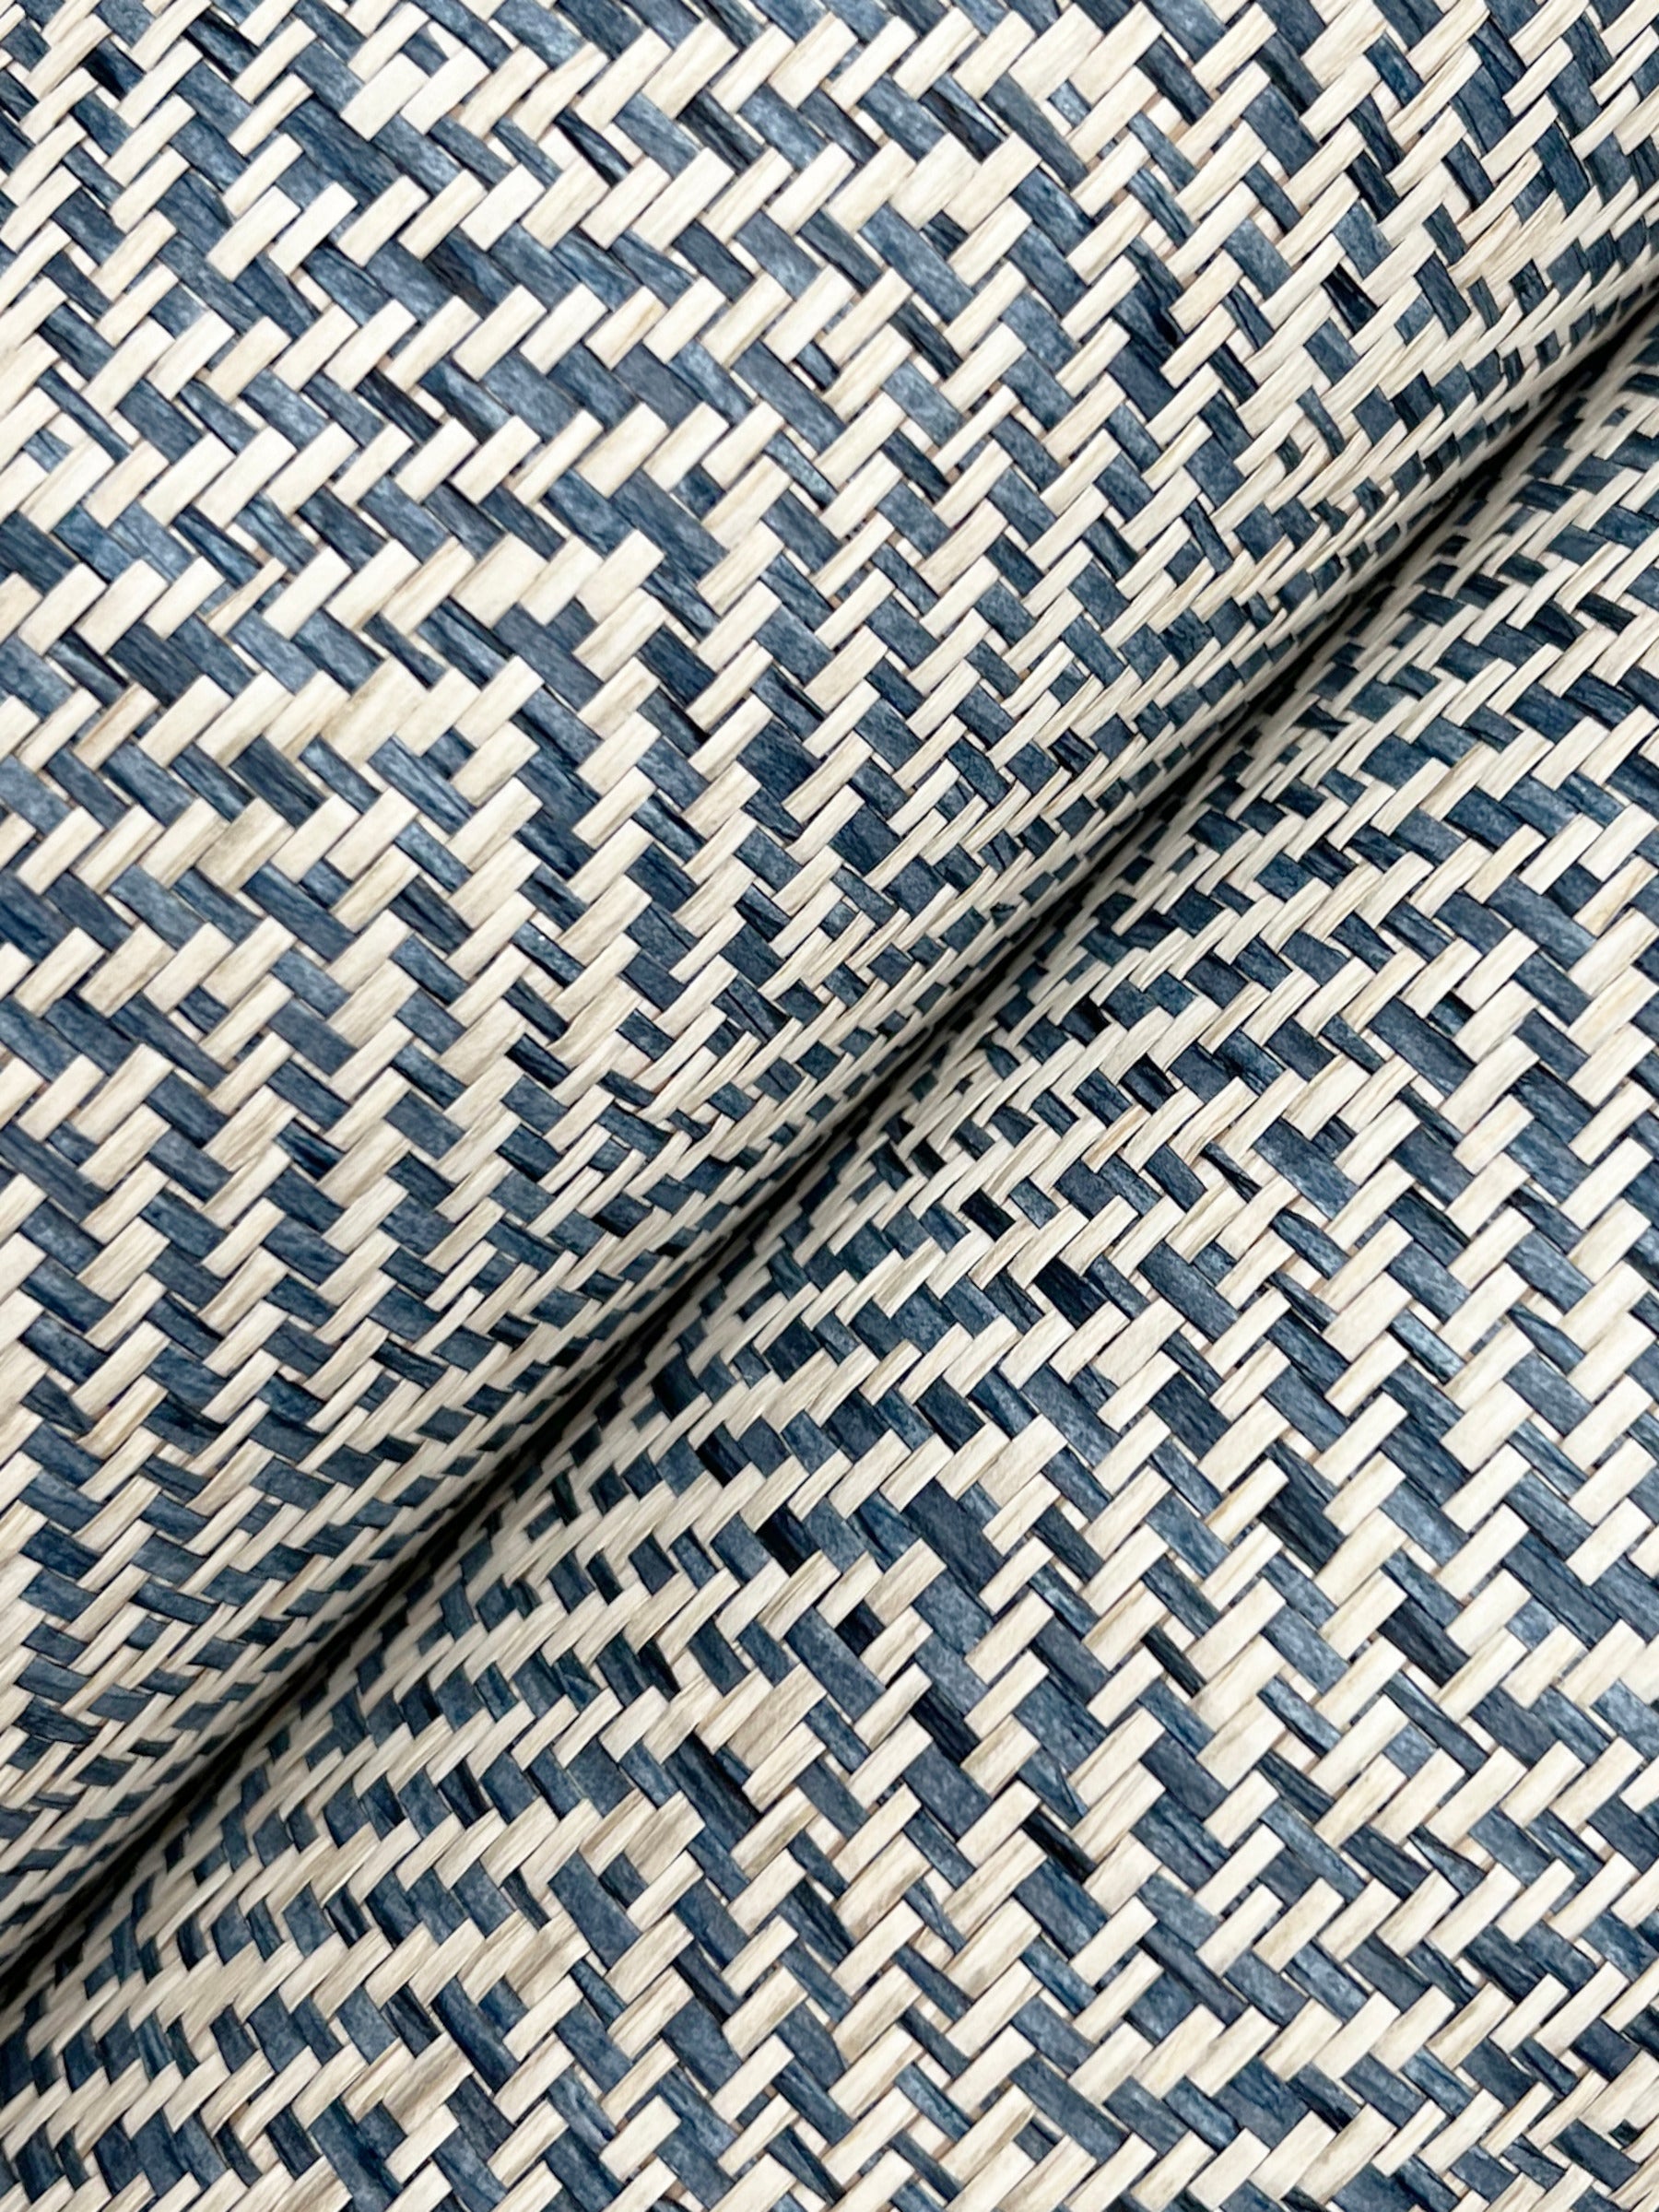 Tailored Weave Wallpaper Wallpaper Ronald Redding Designs   